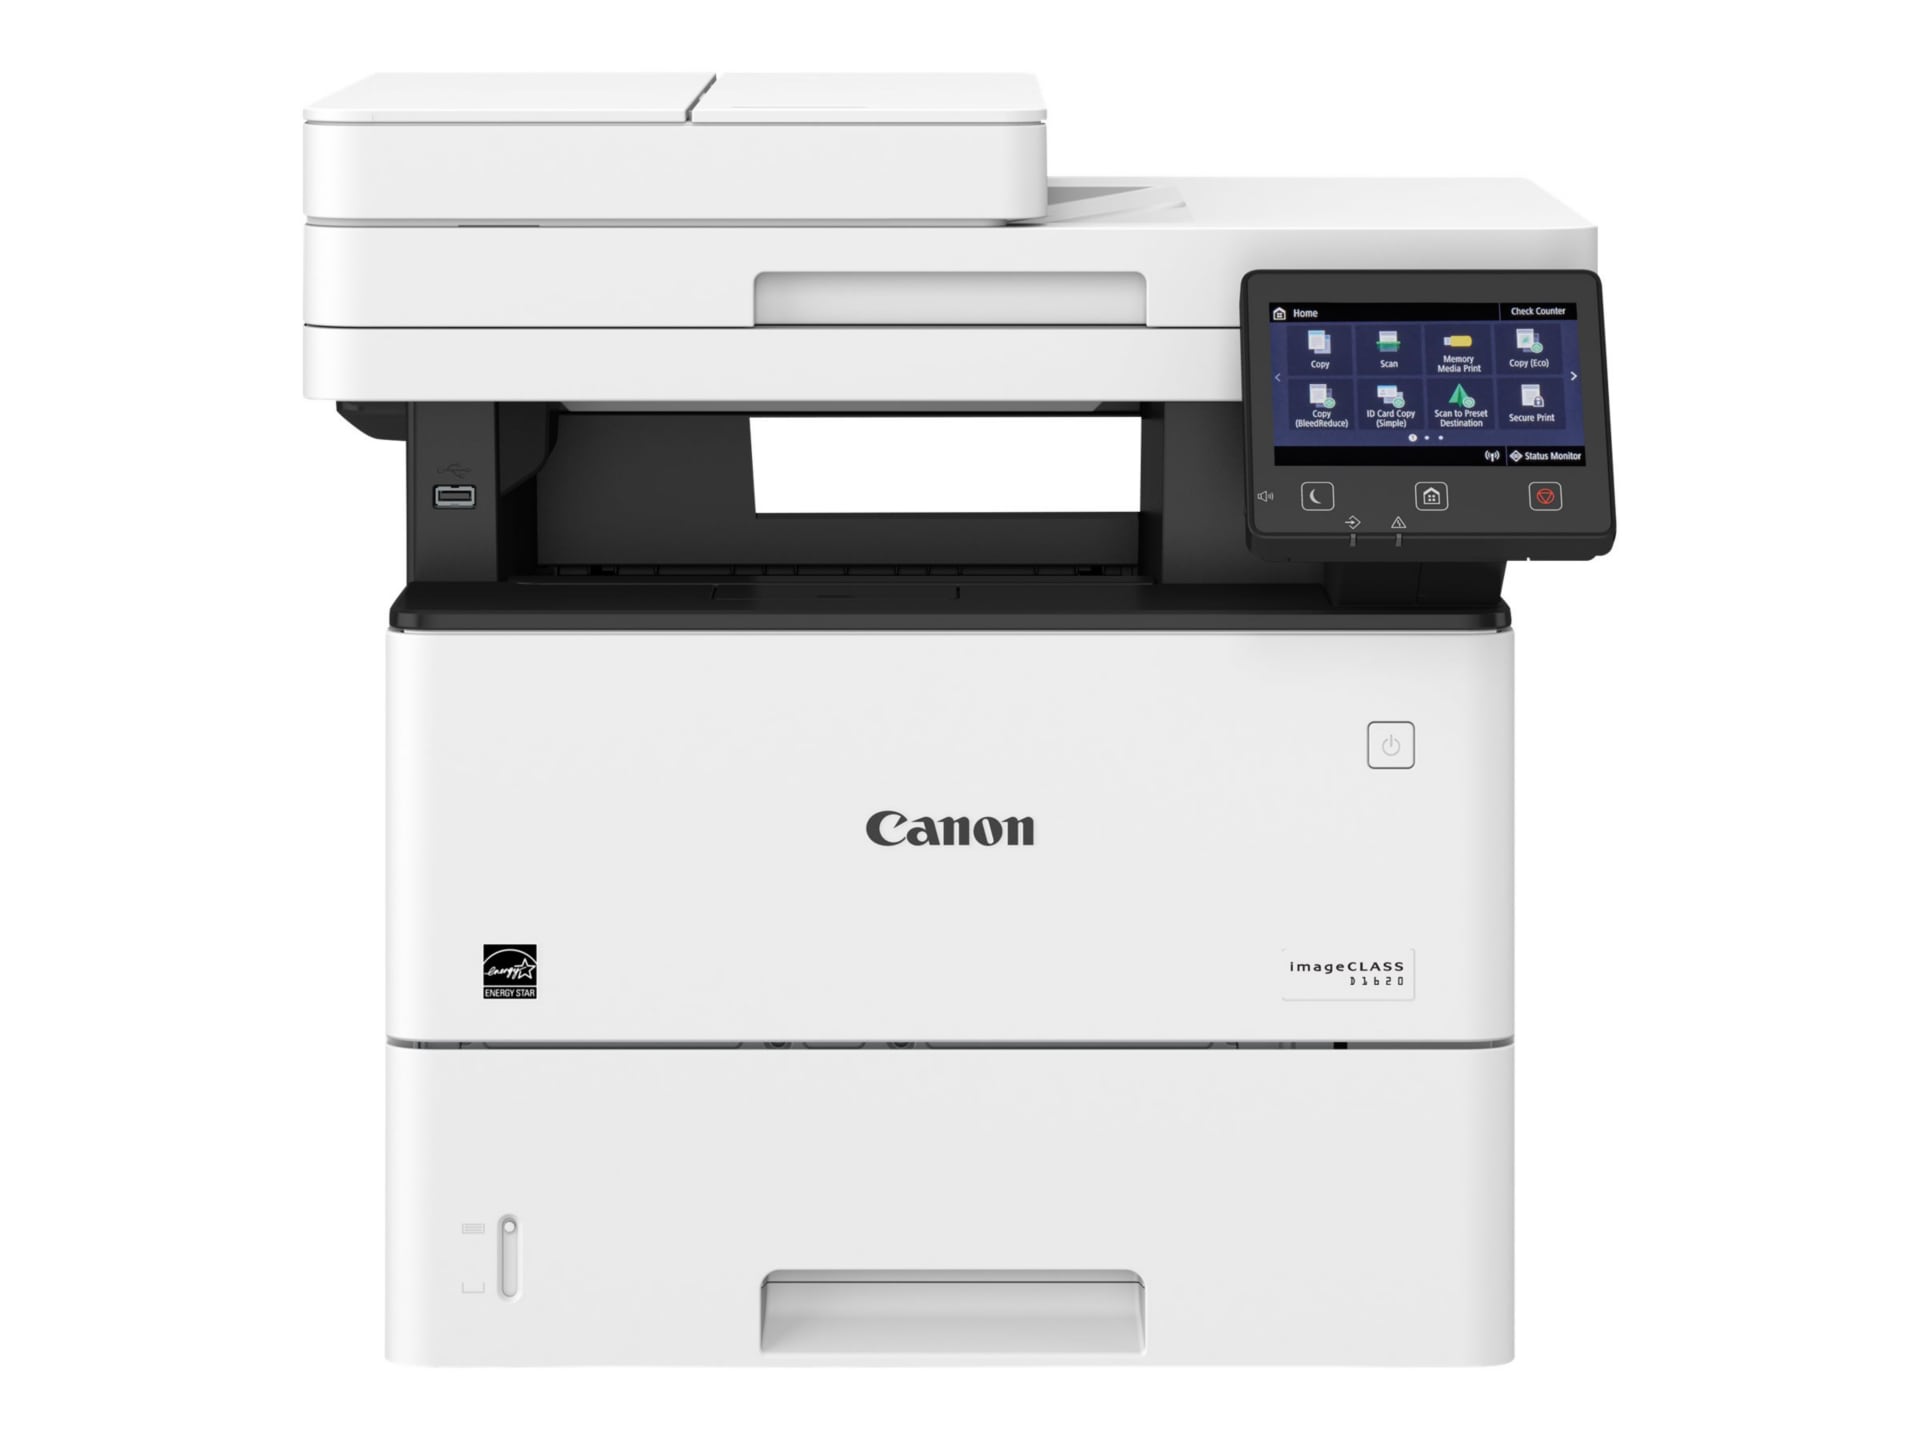 Canon ImageCLASS D1620 - multifunction printer - B/W